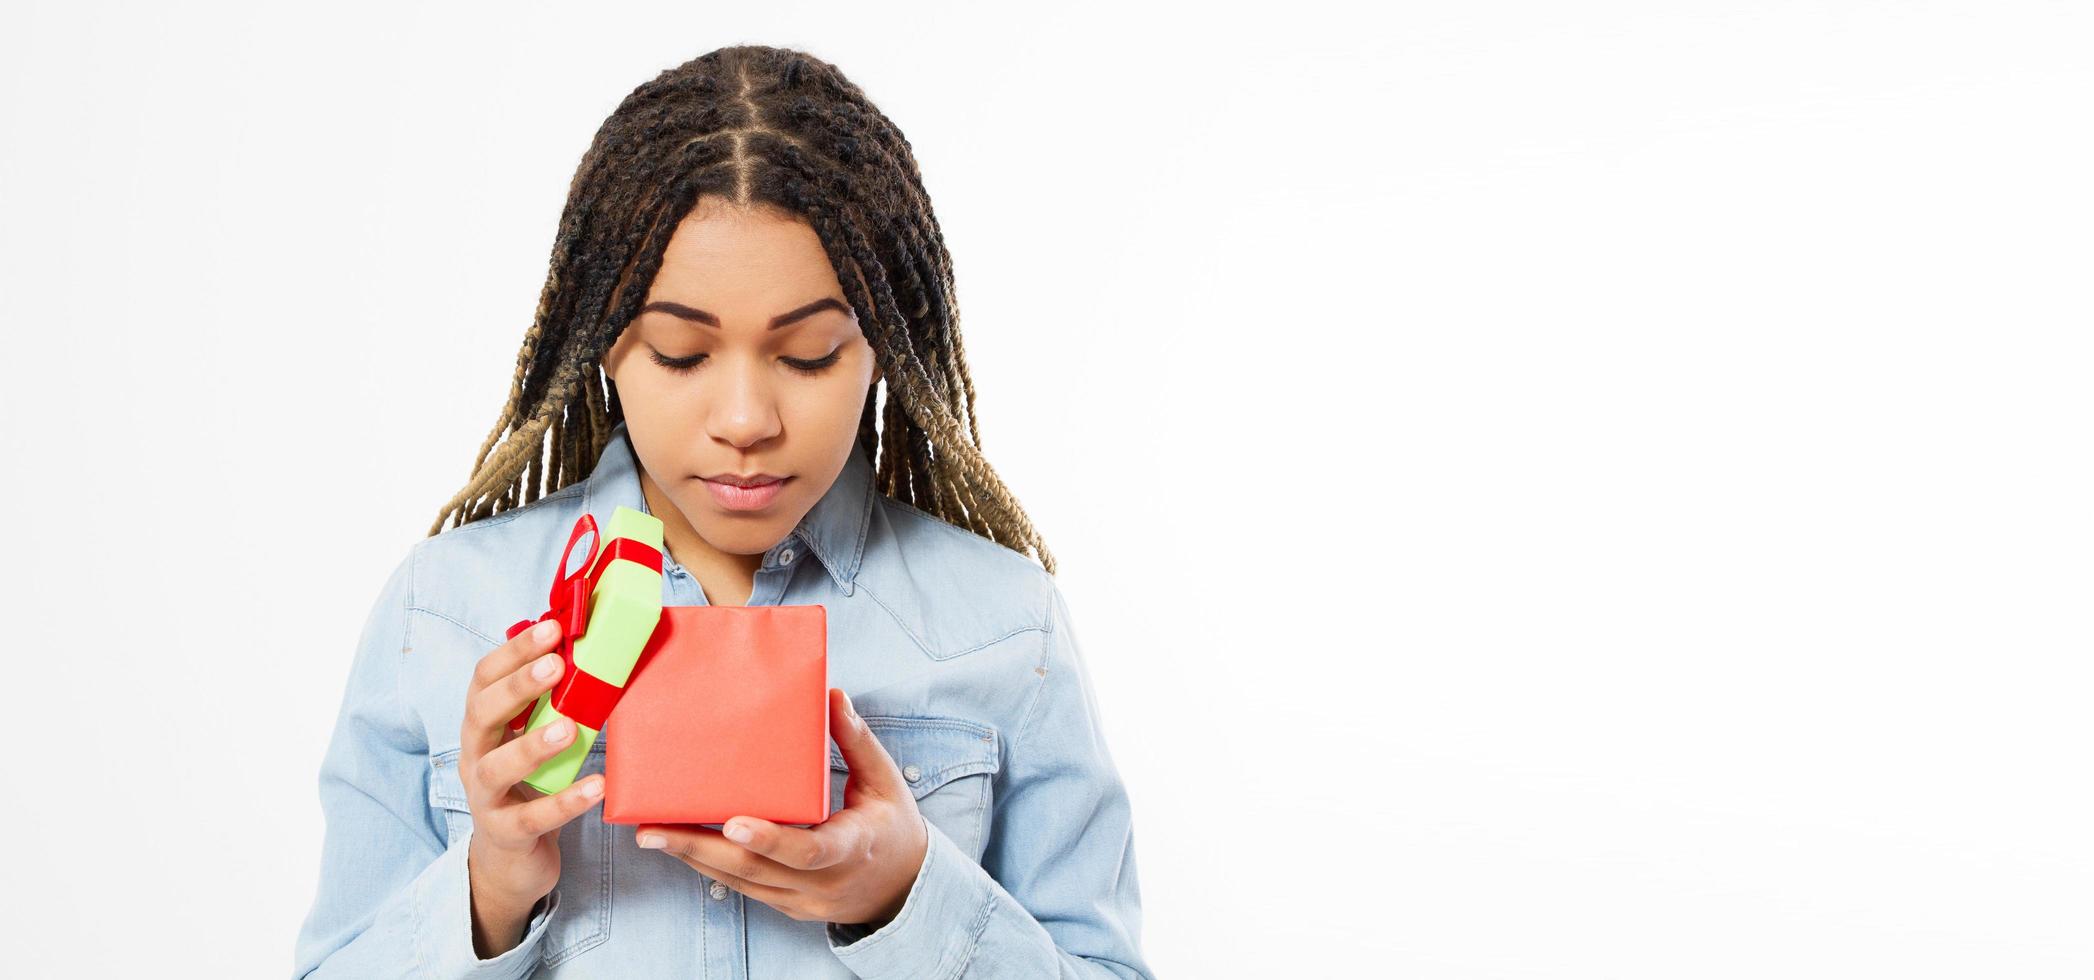 hermosa niña afroamericana abre una caja de regalo espacio de copia maqueta, concepto de celebración navideña foto